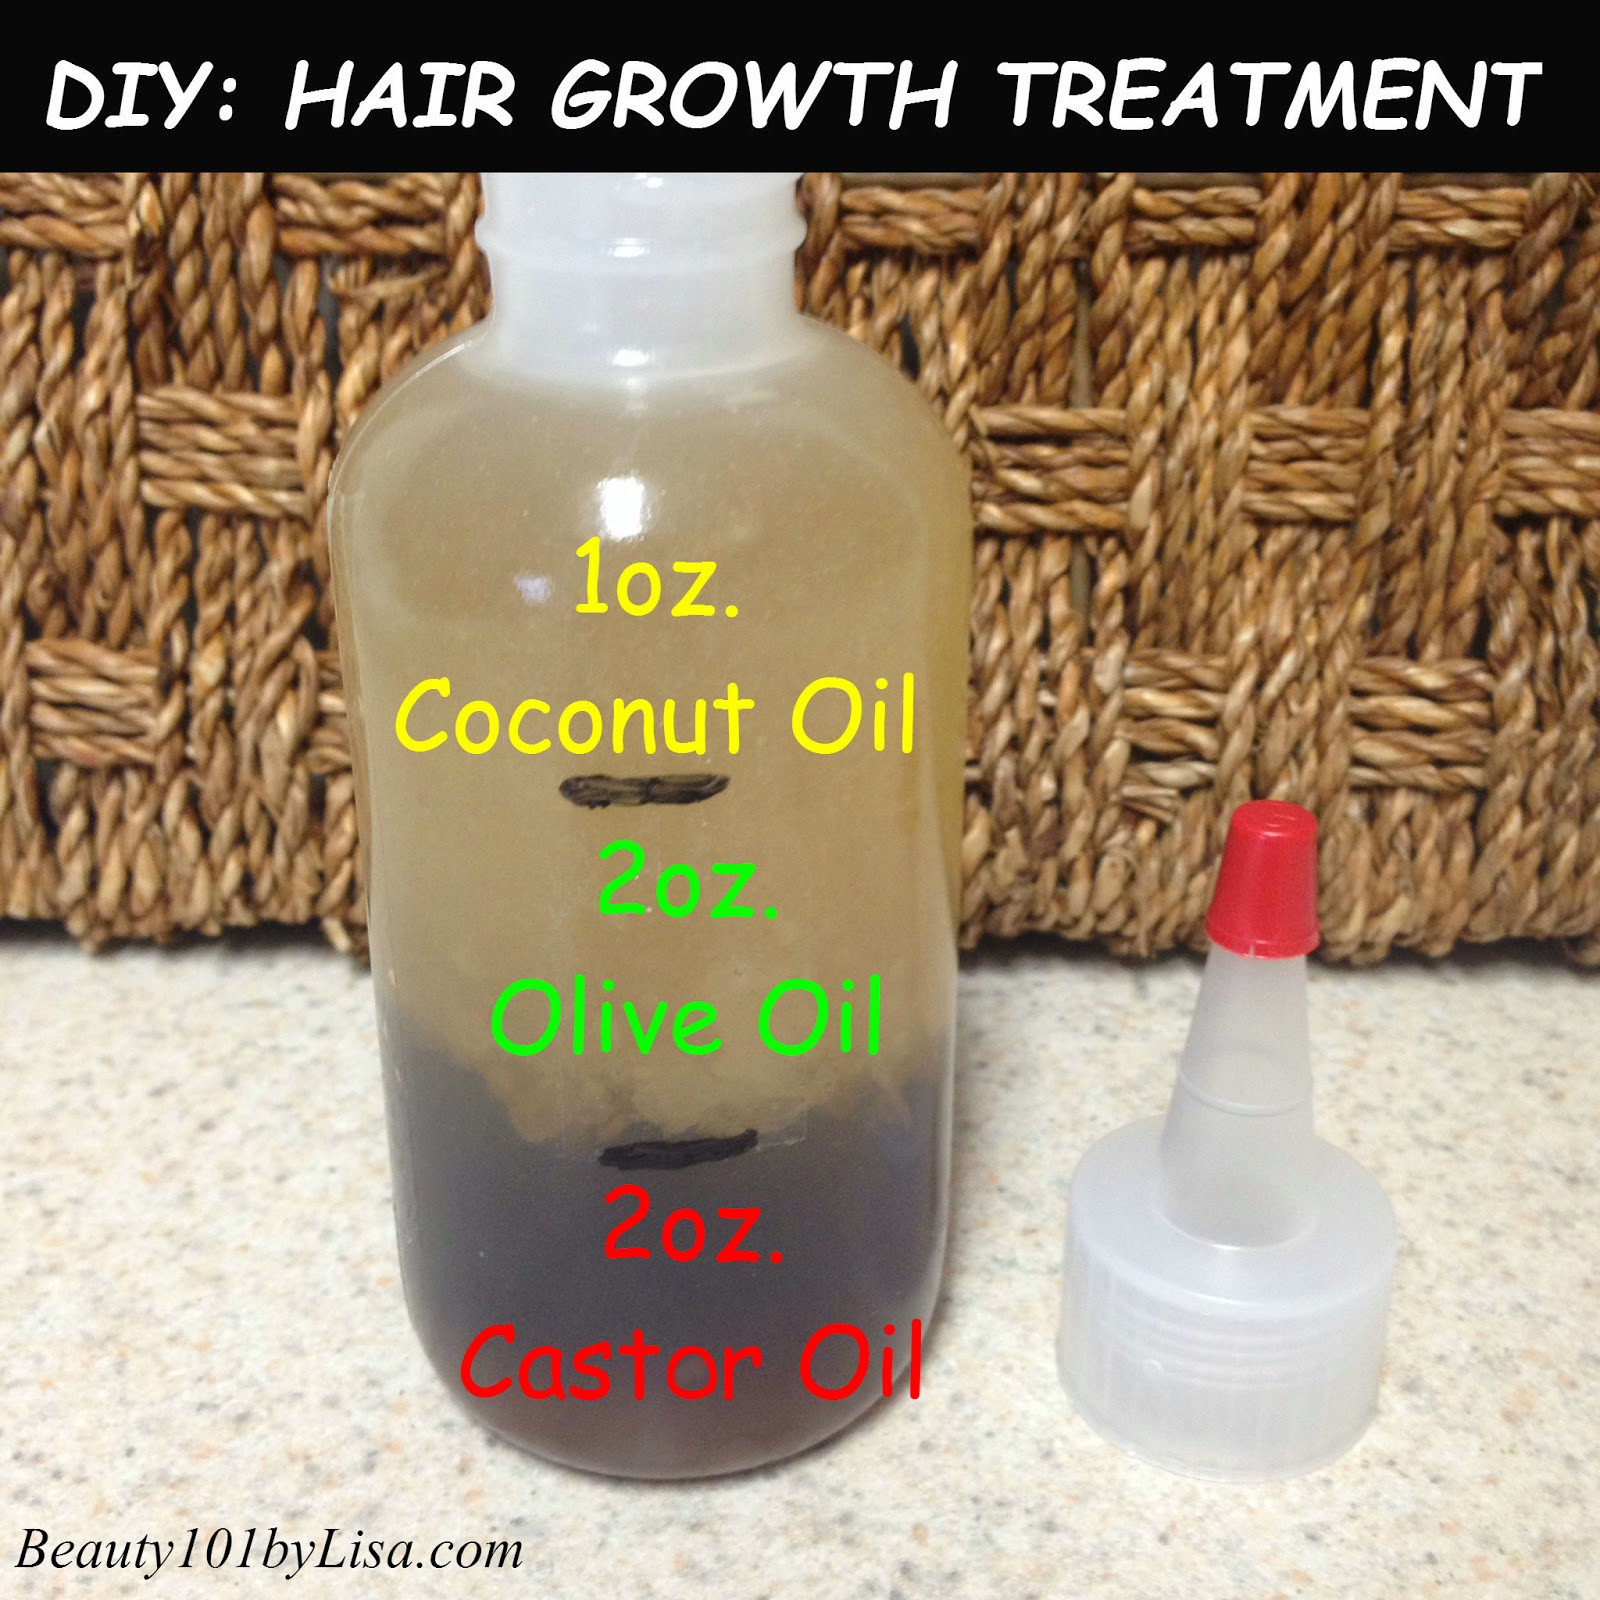 Best ideas about Hair Growth Treatment DIY
. Save or Pin Beauty101byLisa DIY HAIR GROWTH TREATMENT For Eyebrows Now.